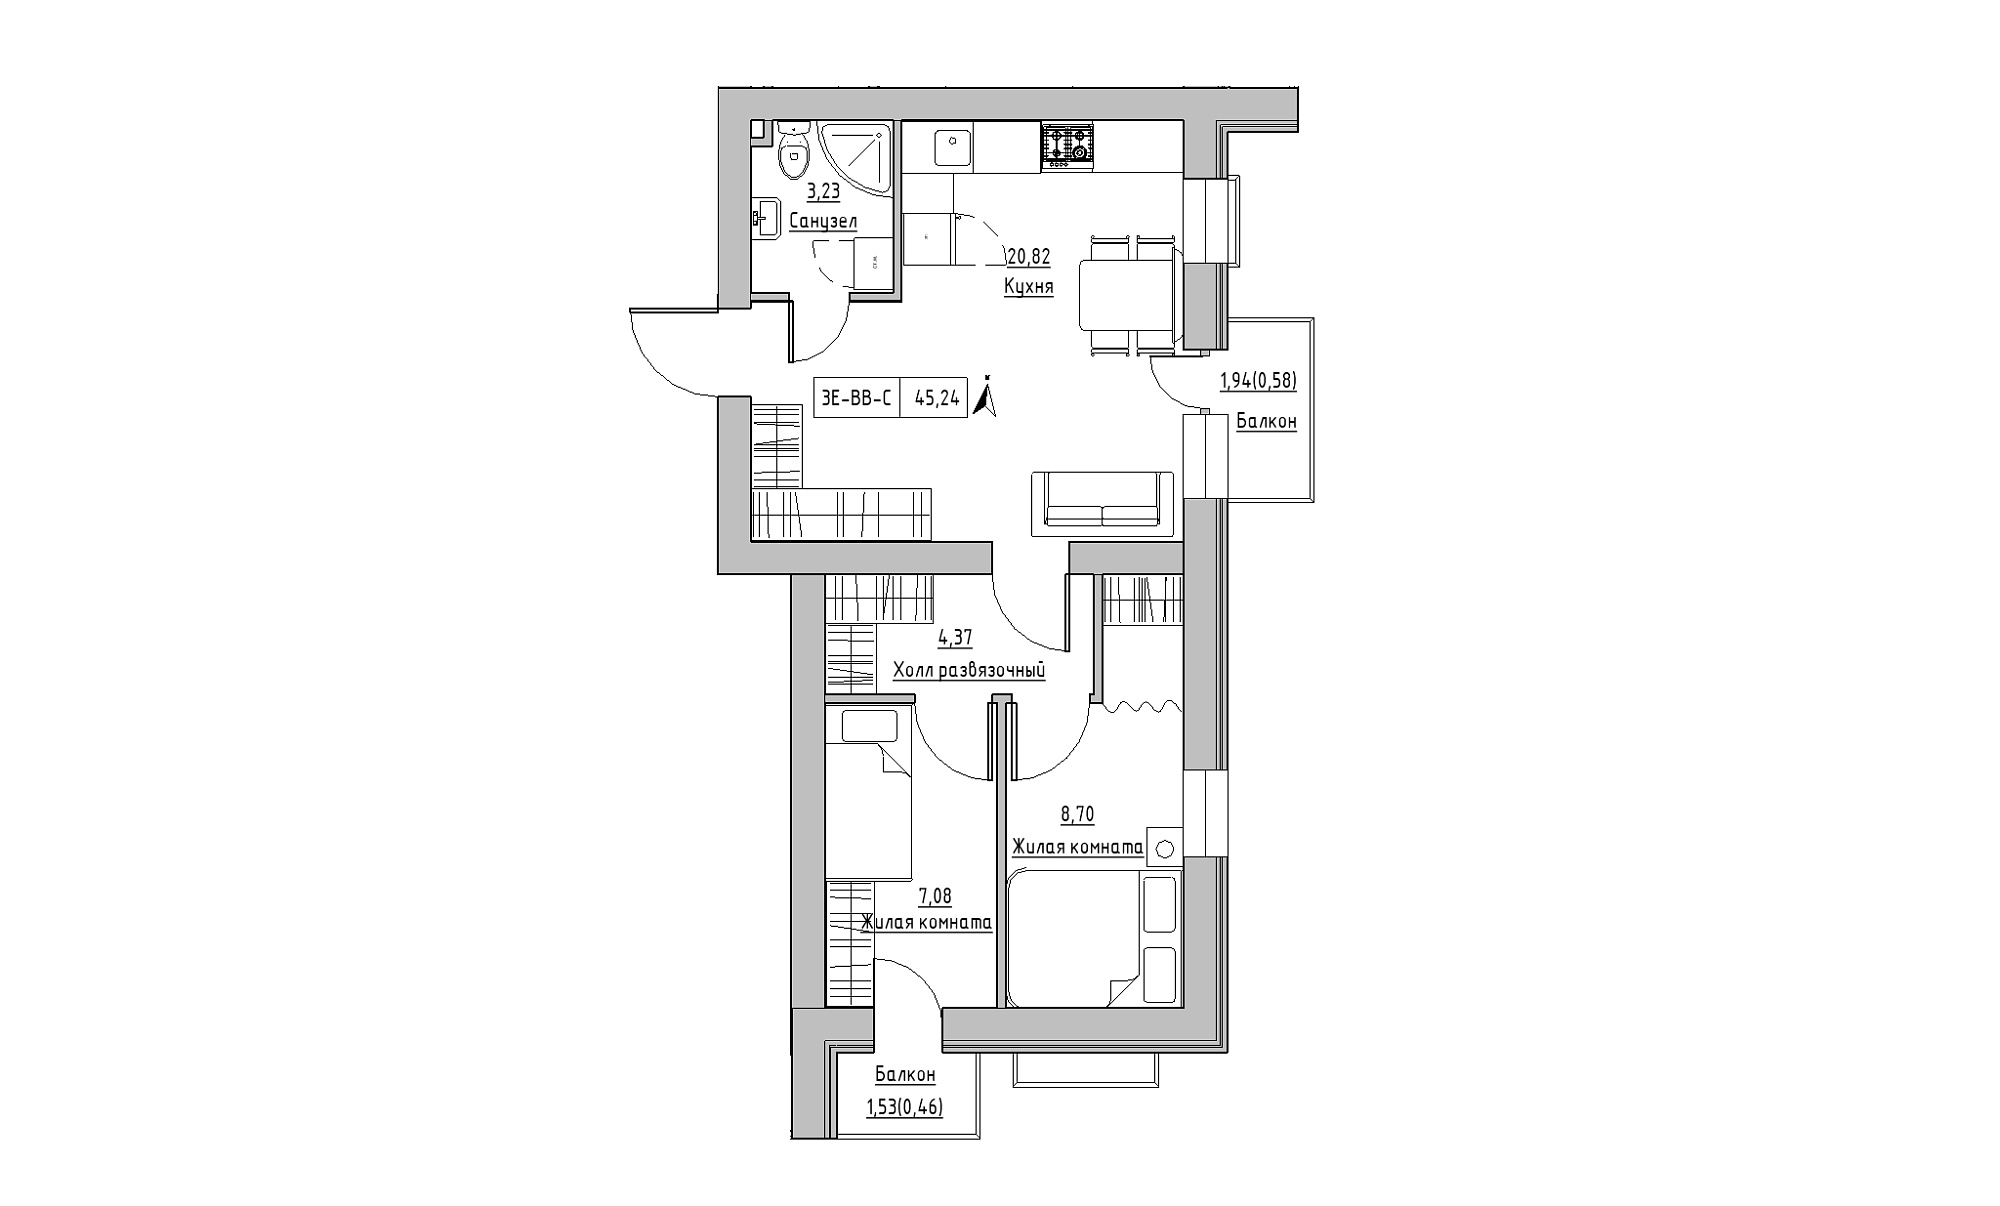 Planning 3-rm flats area 45.24m2, KS-023-05/0008.